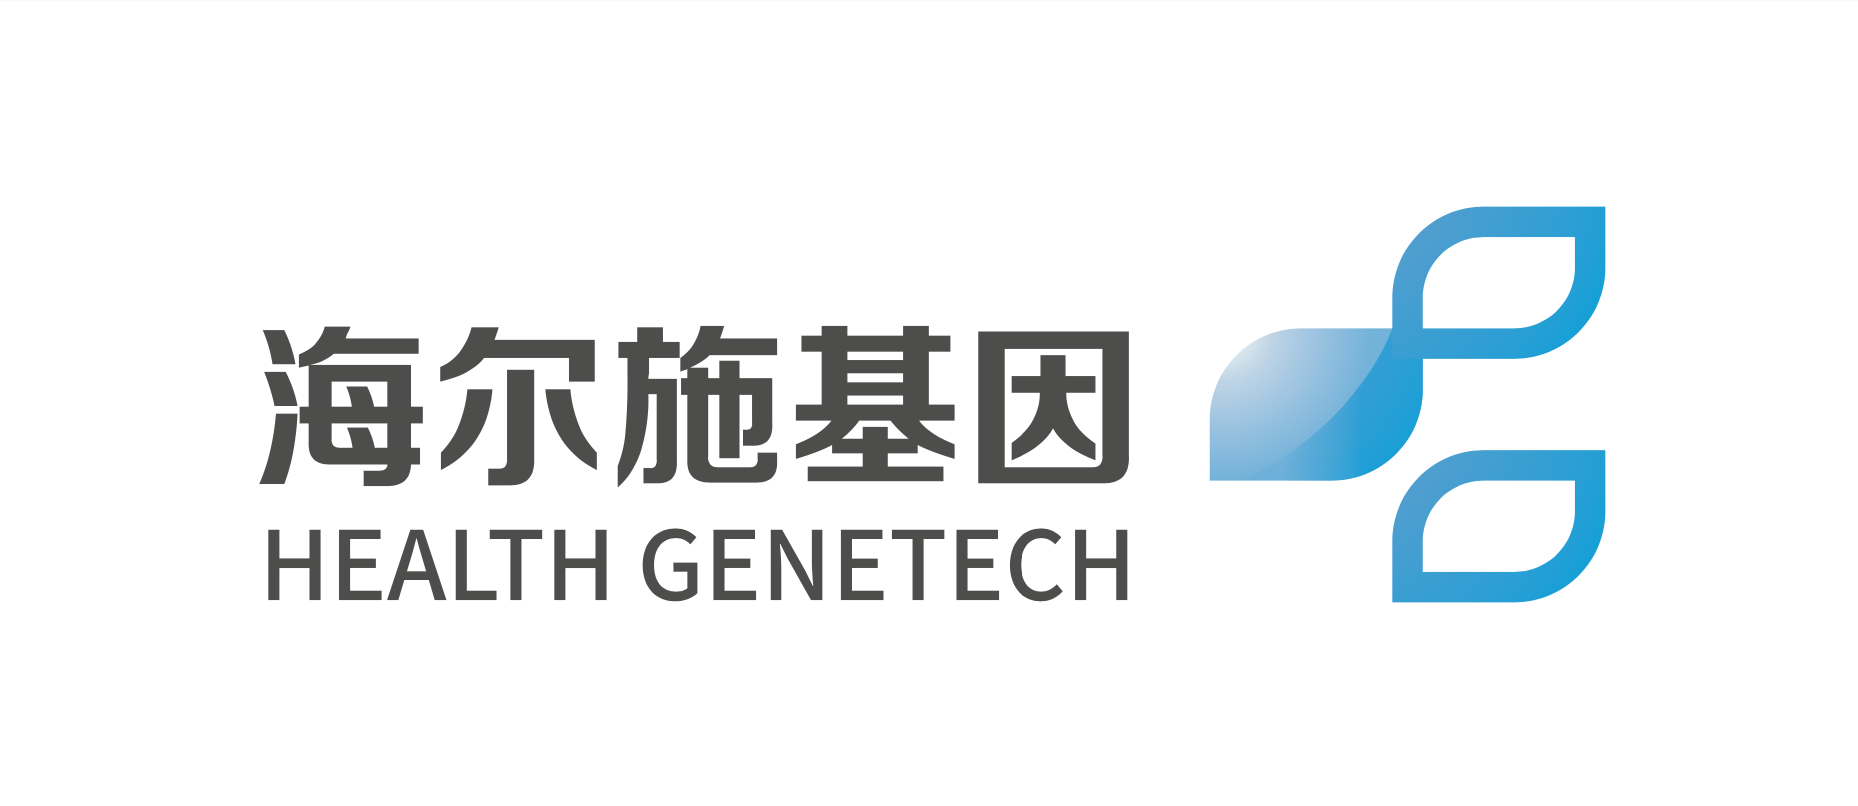 HEALTH Gene Technologies Co. Ltd.